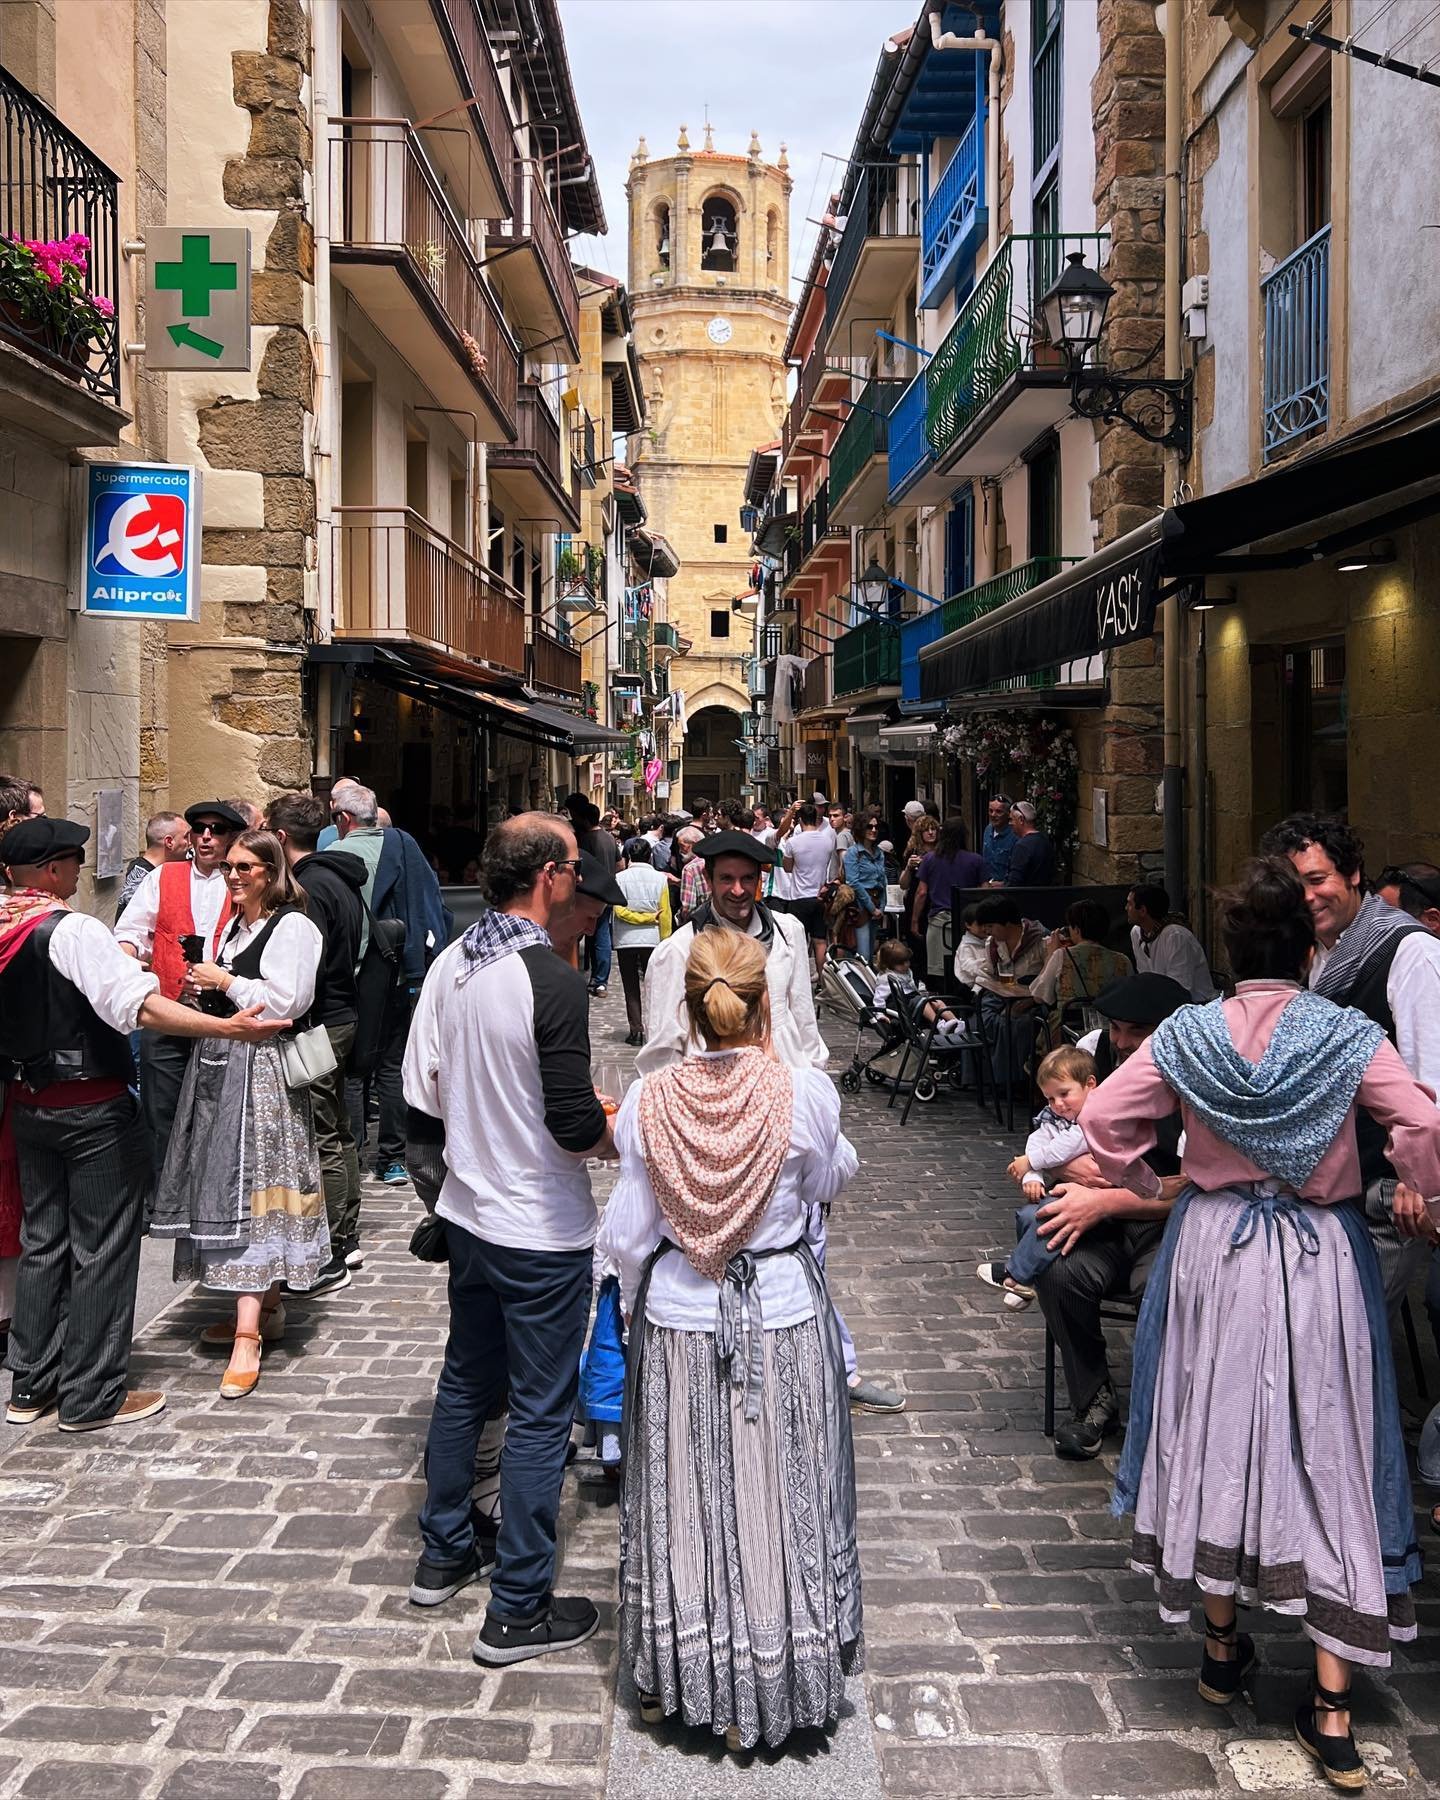 🎊 A stroll through Getaria on Basque Day

#postcardfrom #getaria #basque #spain #travel